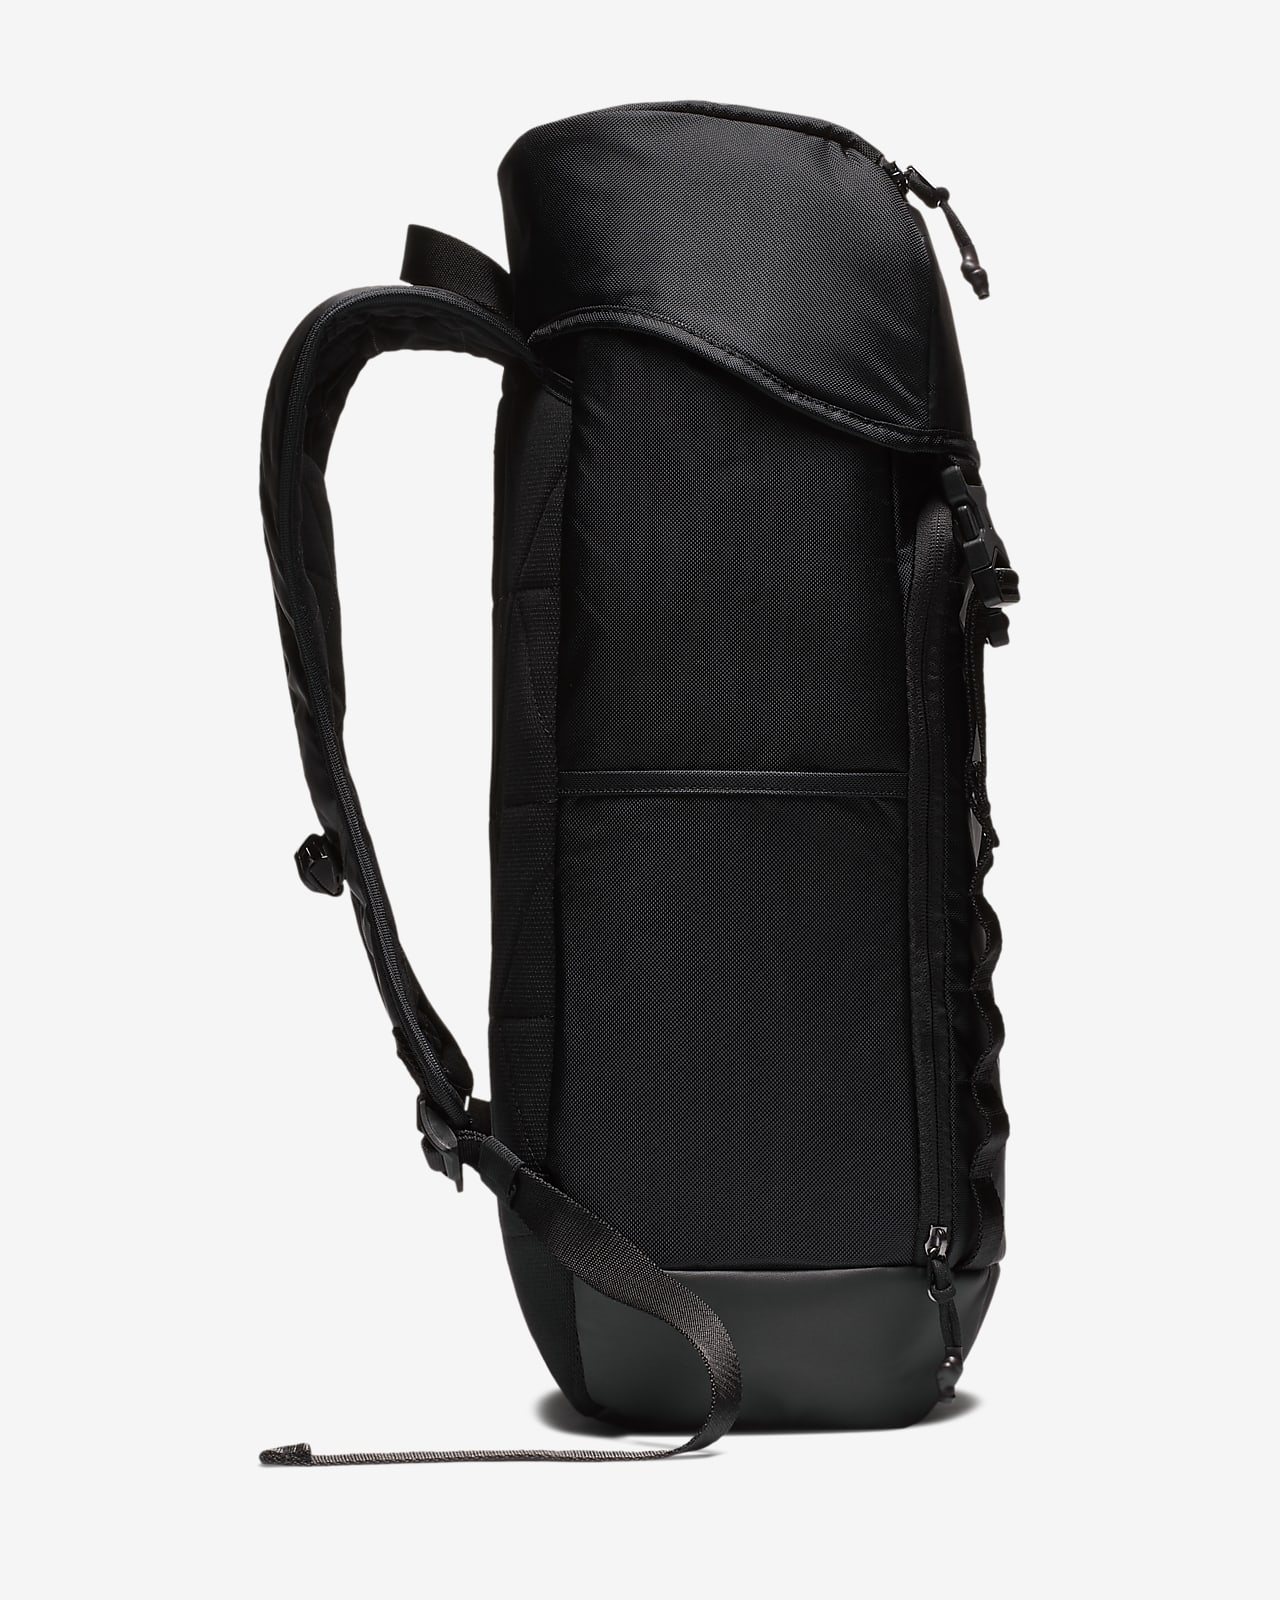 vapor 2. backpack